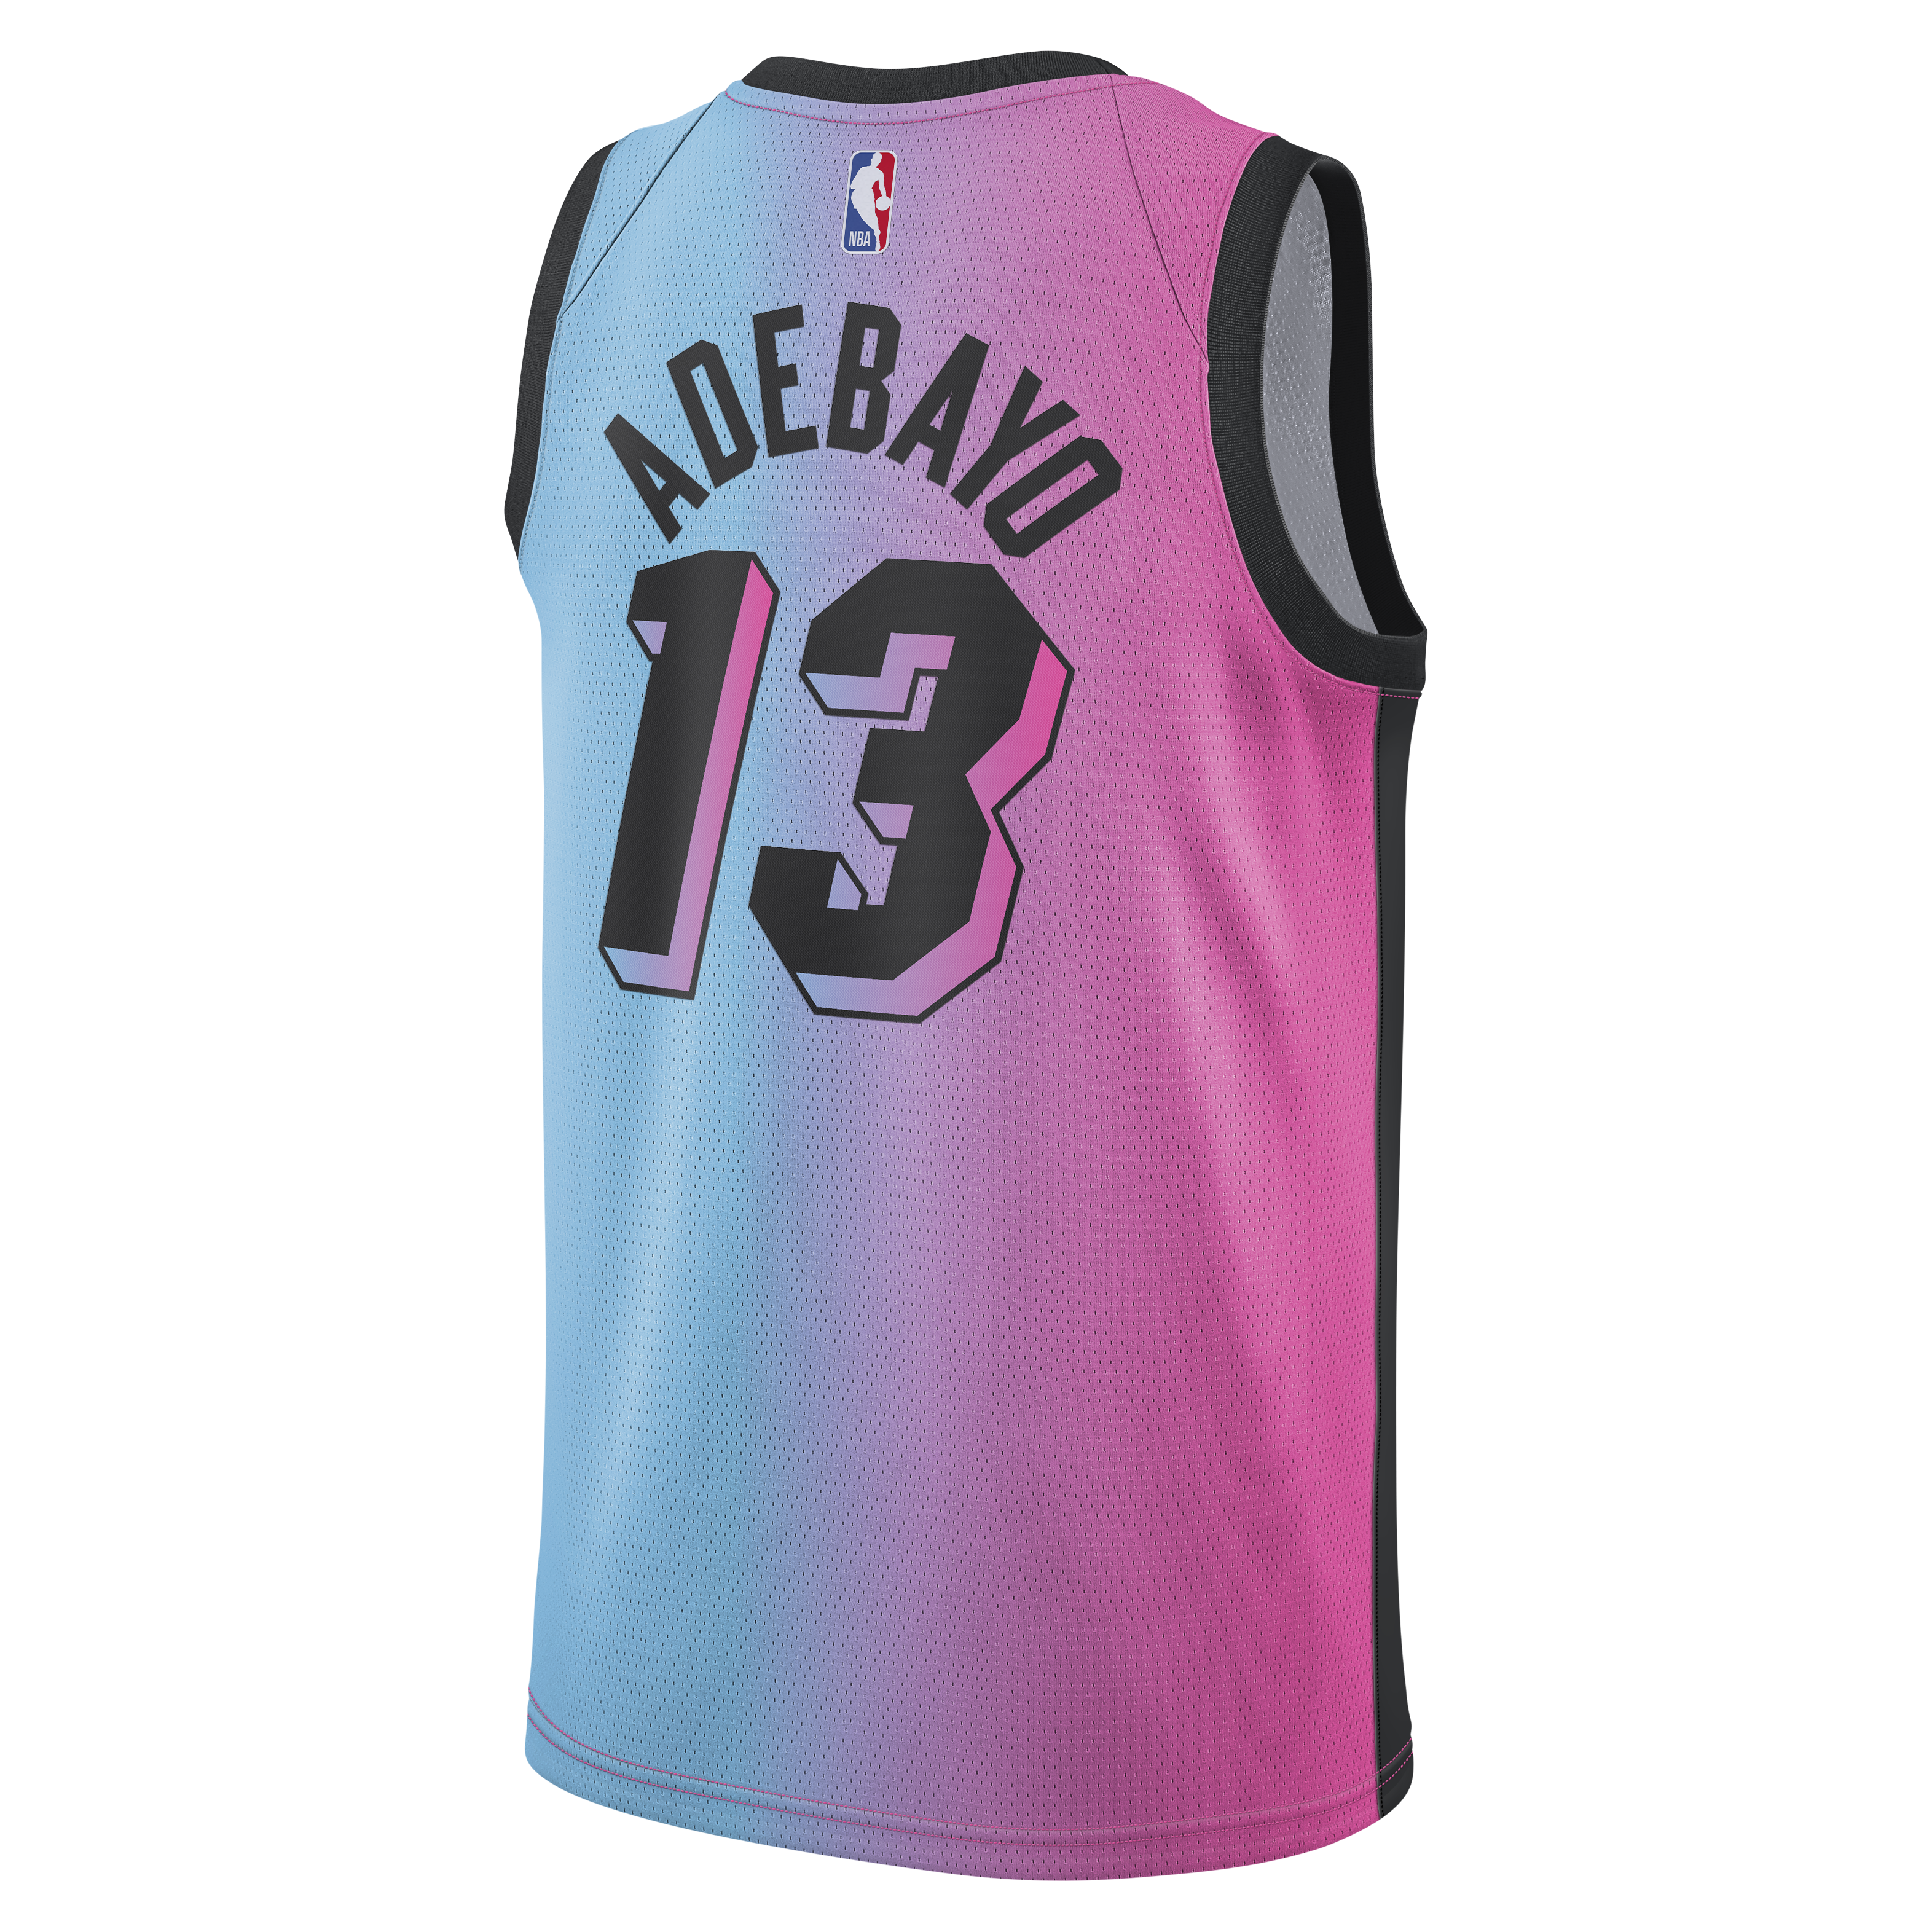 NIKE NBA BAM Ado Miami Heat Vice City Edition Swingman Authentic Jersey  52 $65.00 - PicClick